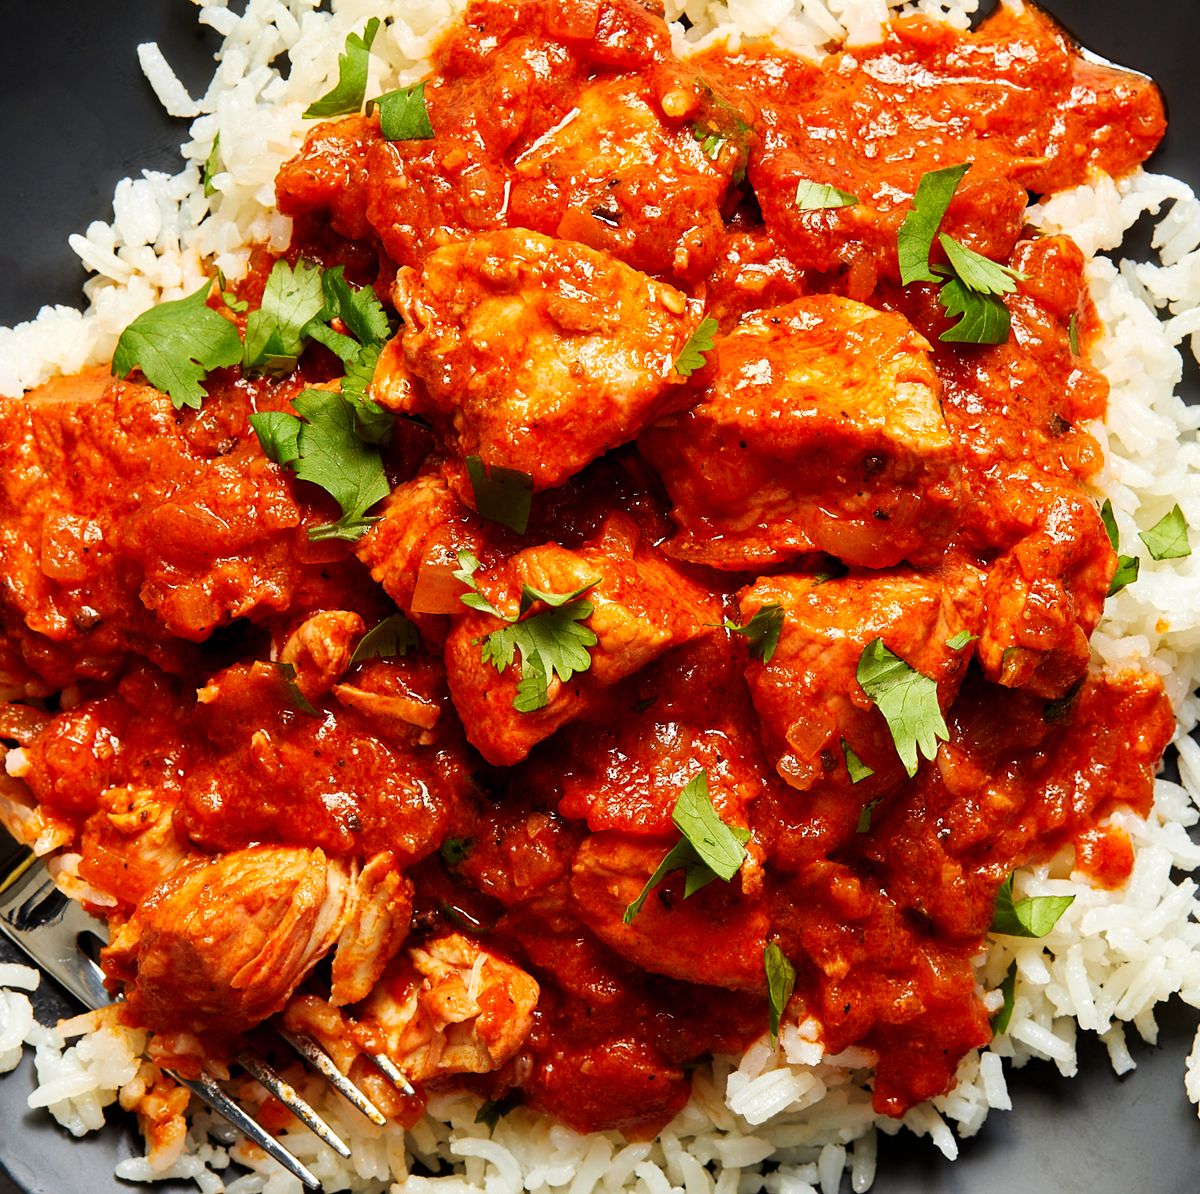 Best Chicken Madras Curry Recipe - How to Make Homemade Chicken Madras